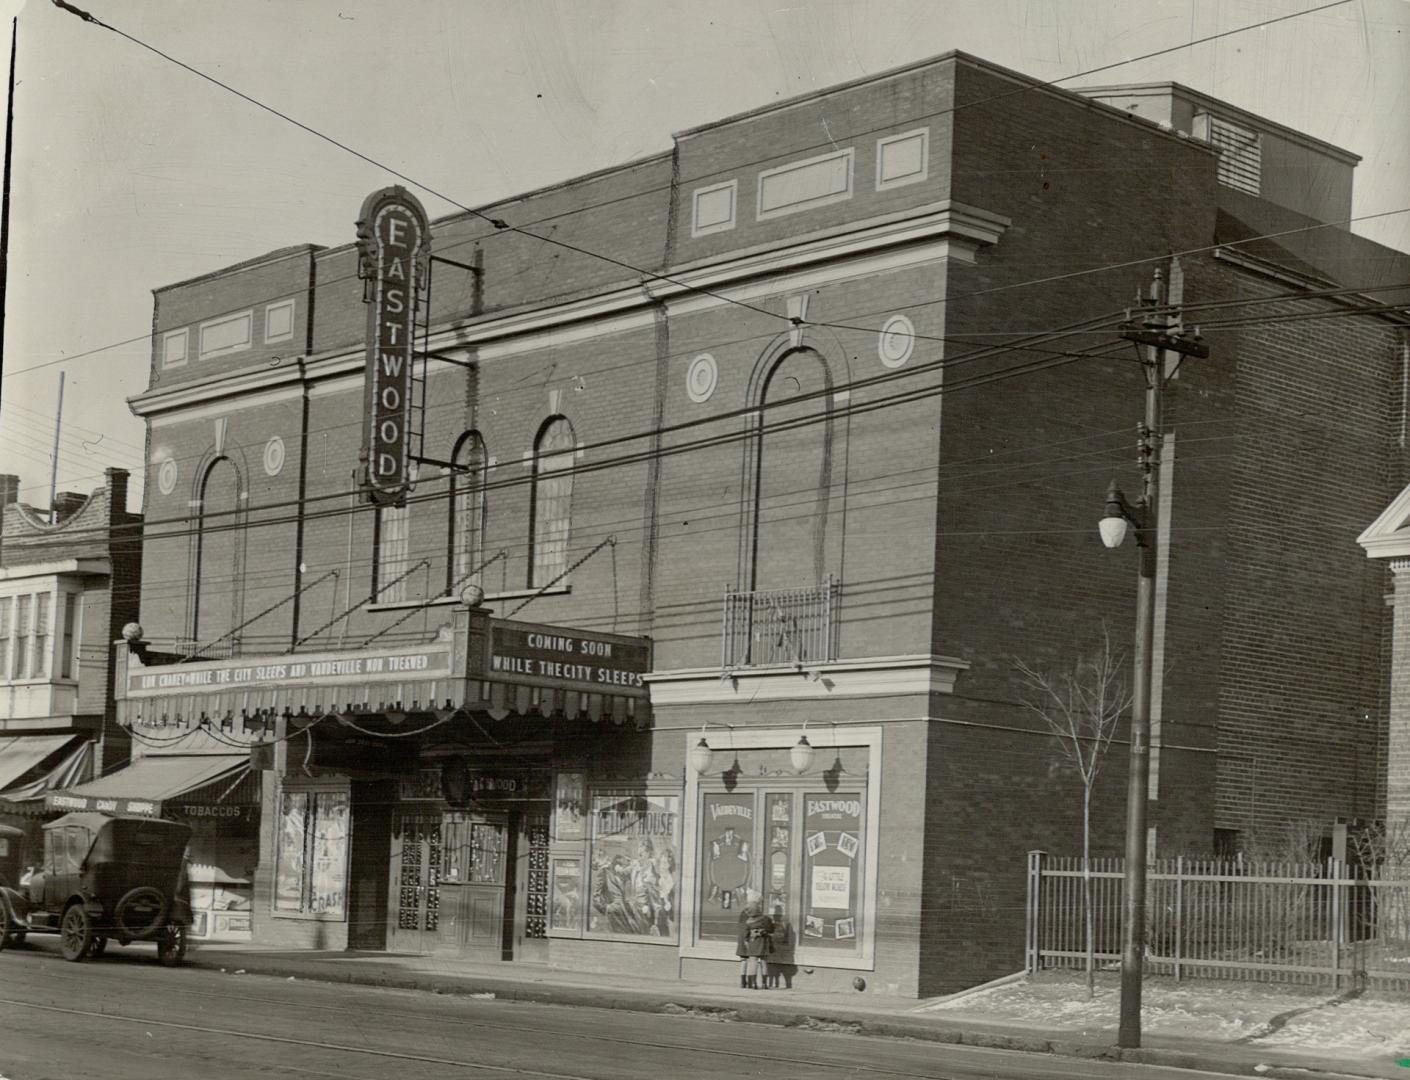 Eastwood Theatre, Gerrard Street East, north side, between Hiawatha Road and Ashdale Avenue, Toronto, Ontario